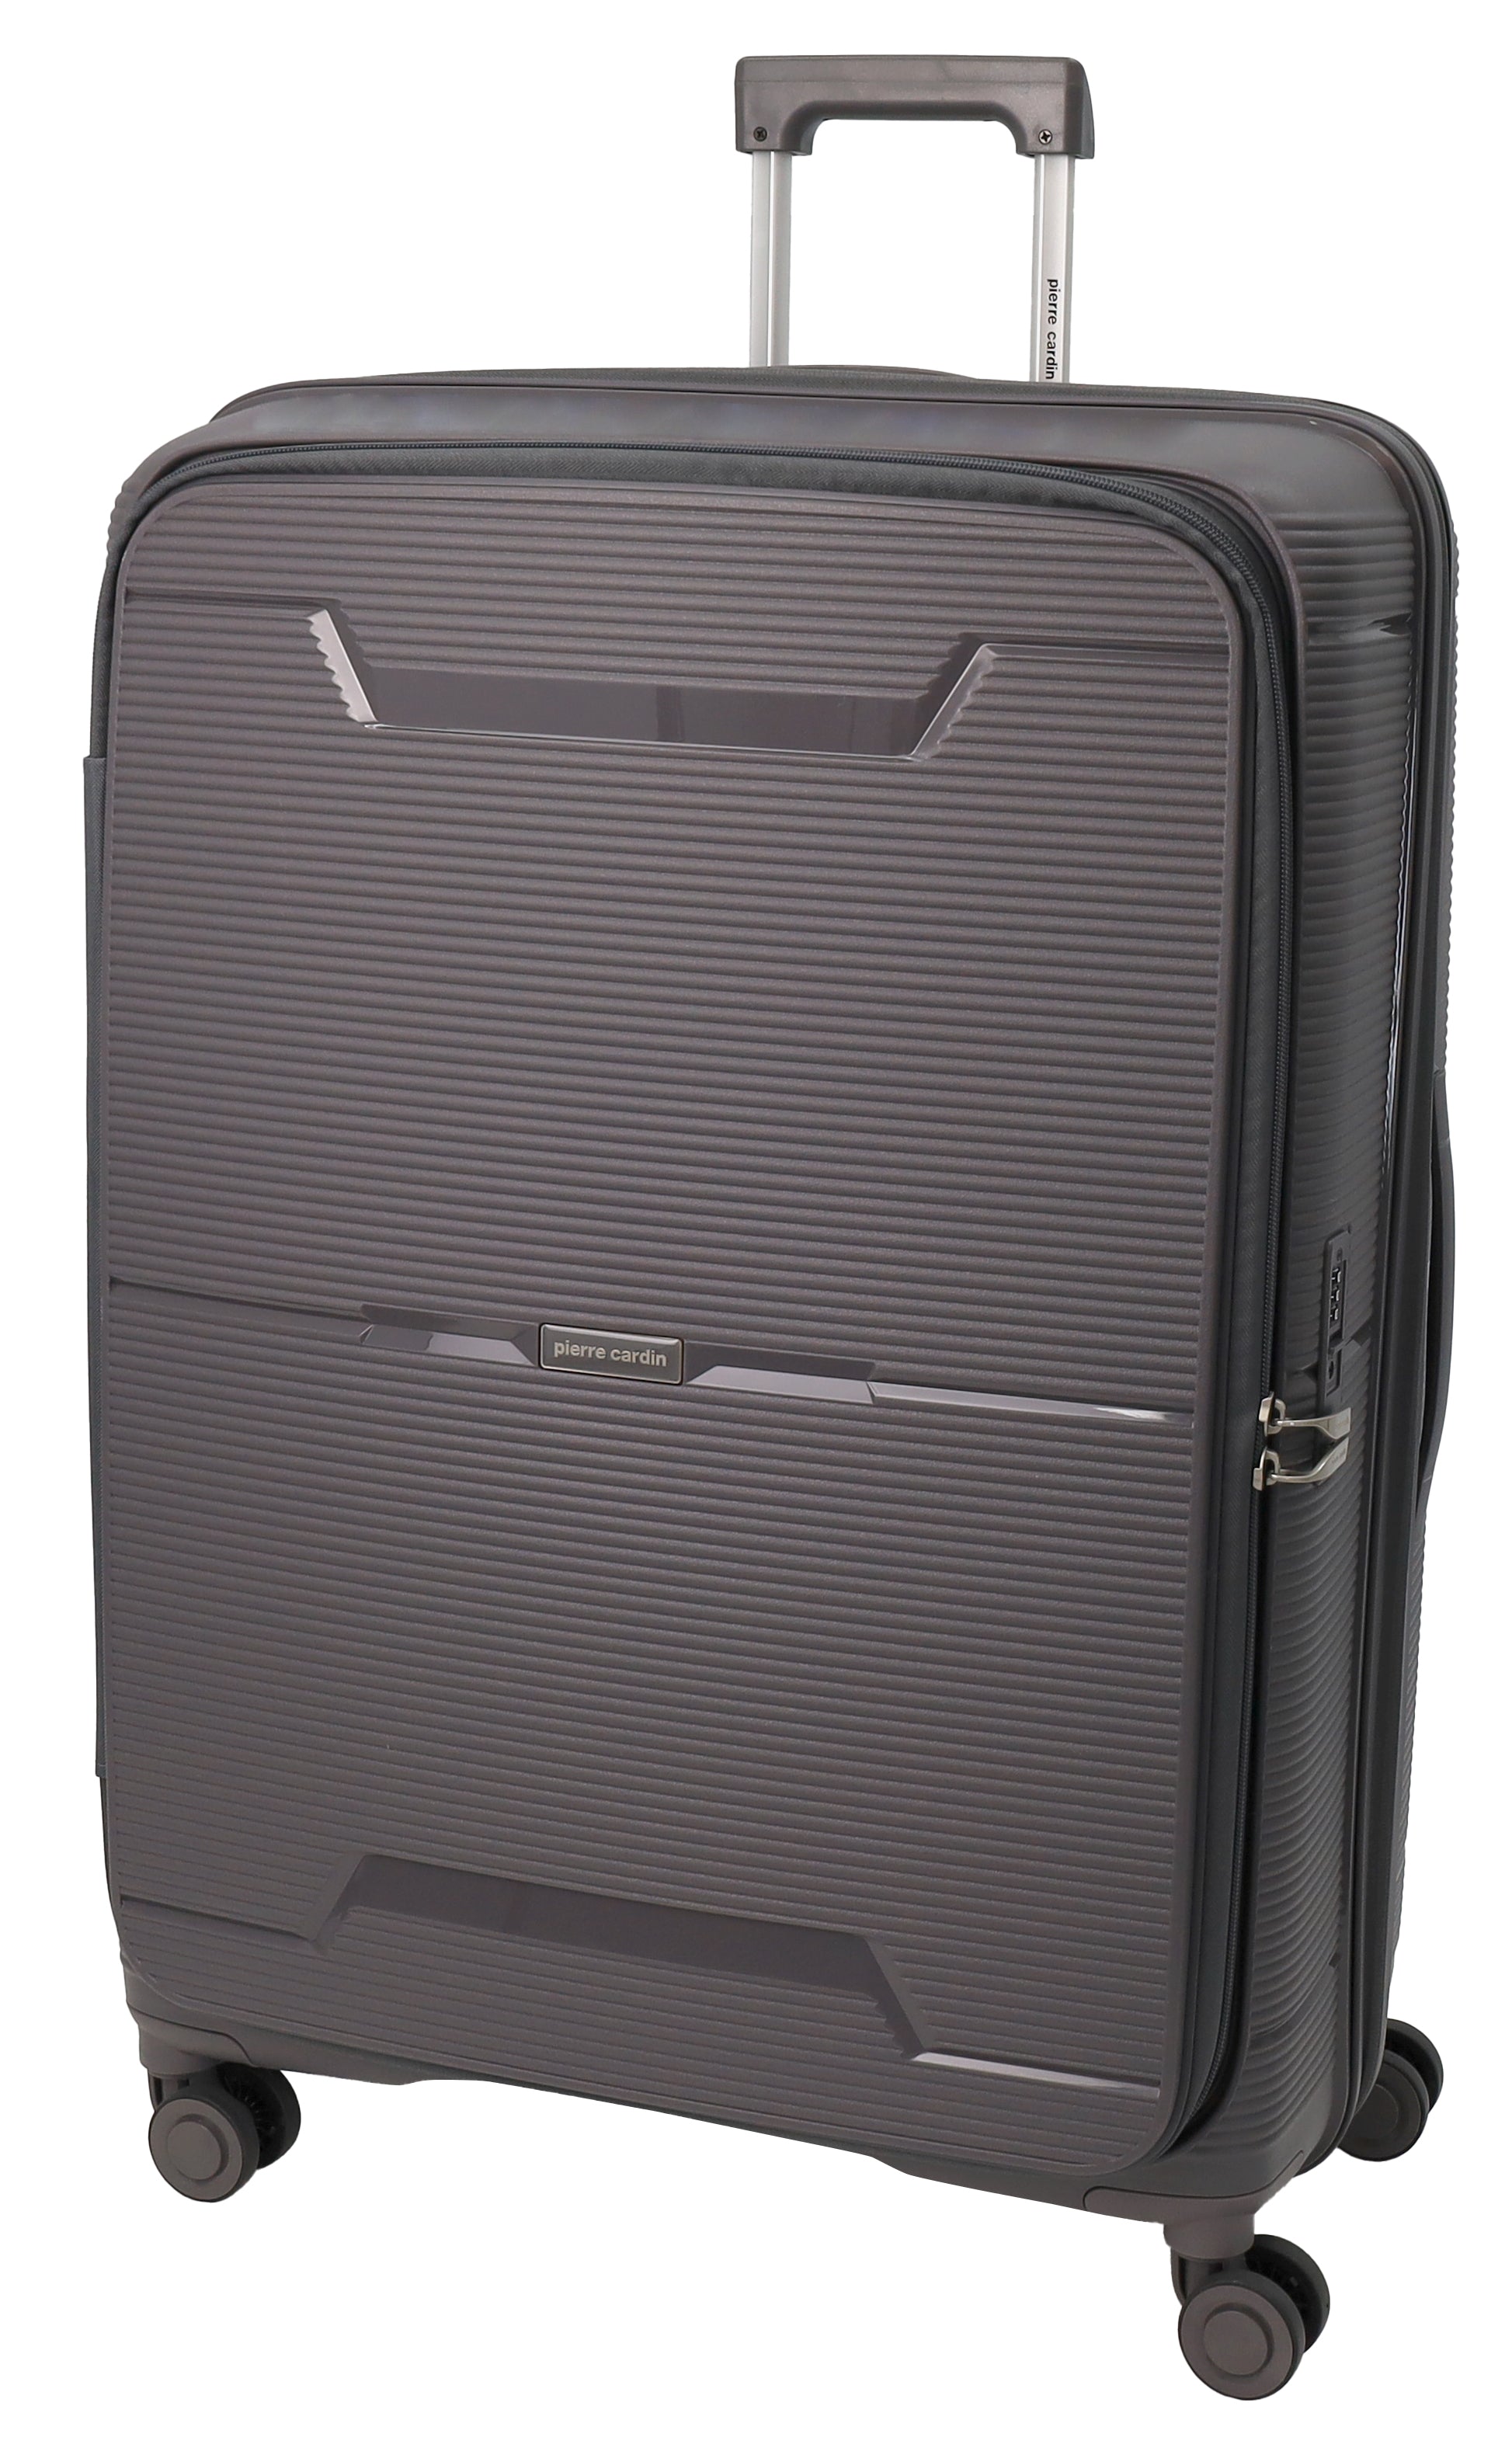 Pierre Cardin - PC3939C 54cm Cabin Hard Shell Suitcase - Graphite-1